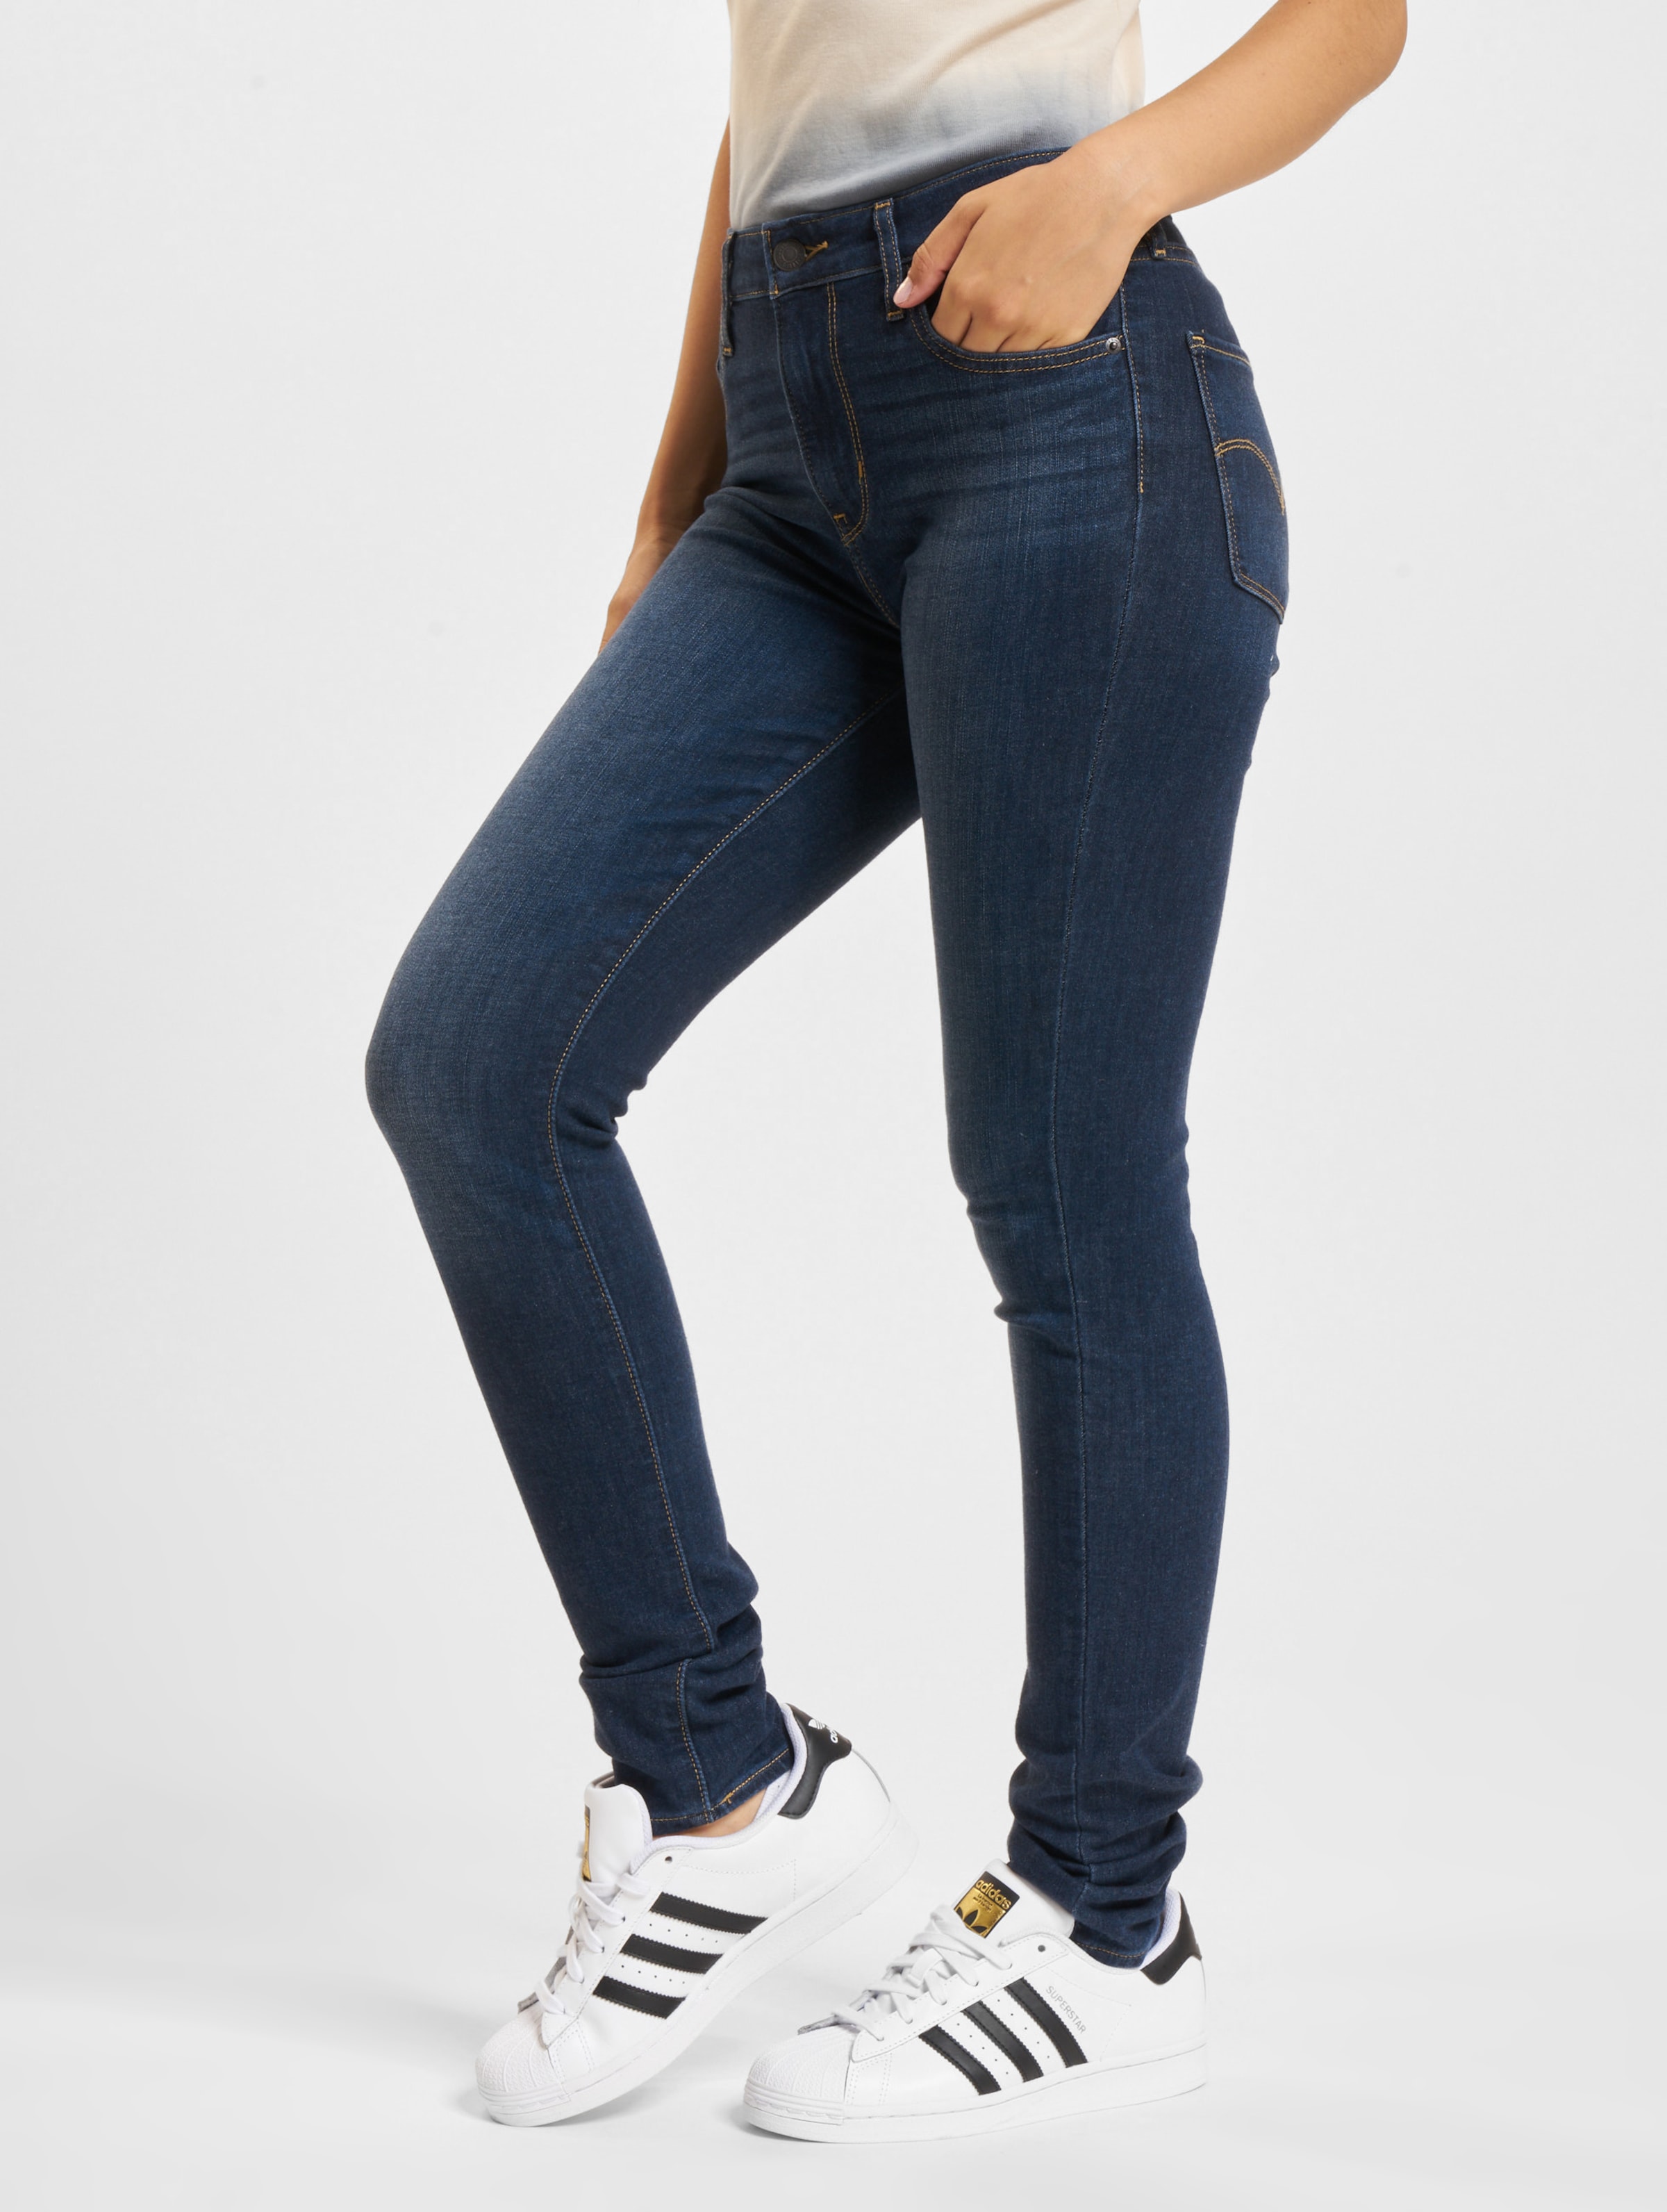 Levi's 721 High Rise Skinny Fit Jeans Frauen,Unisex op kleur blauw, Maat 2628